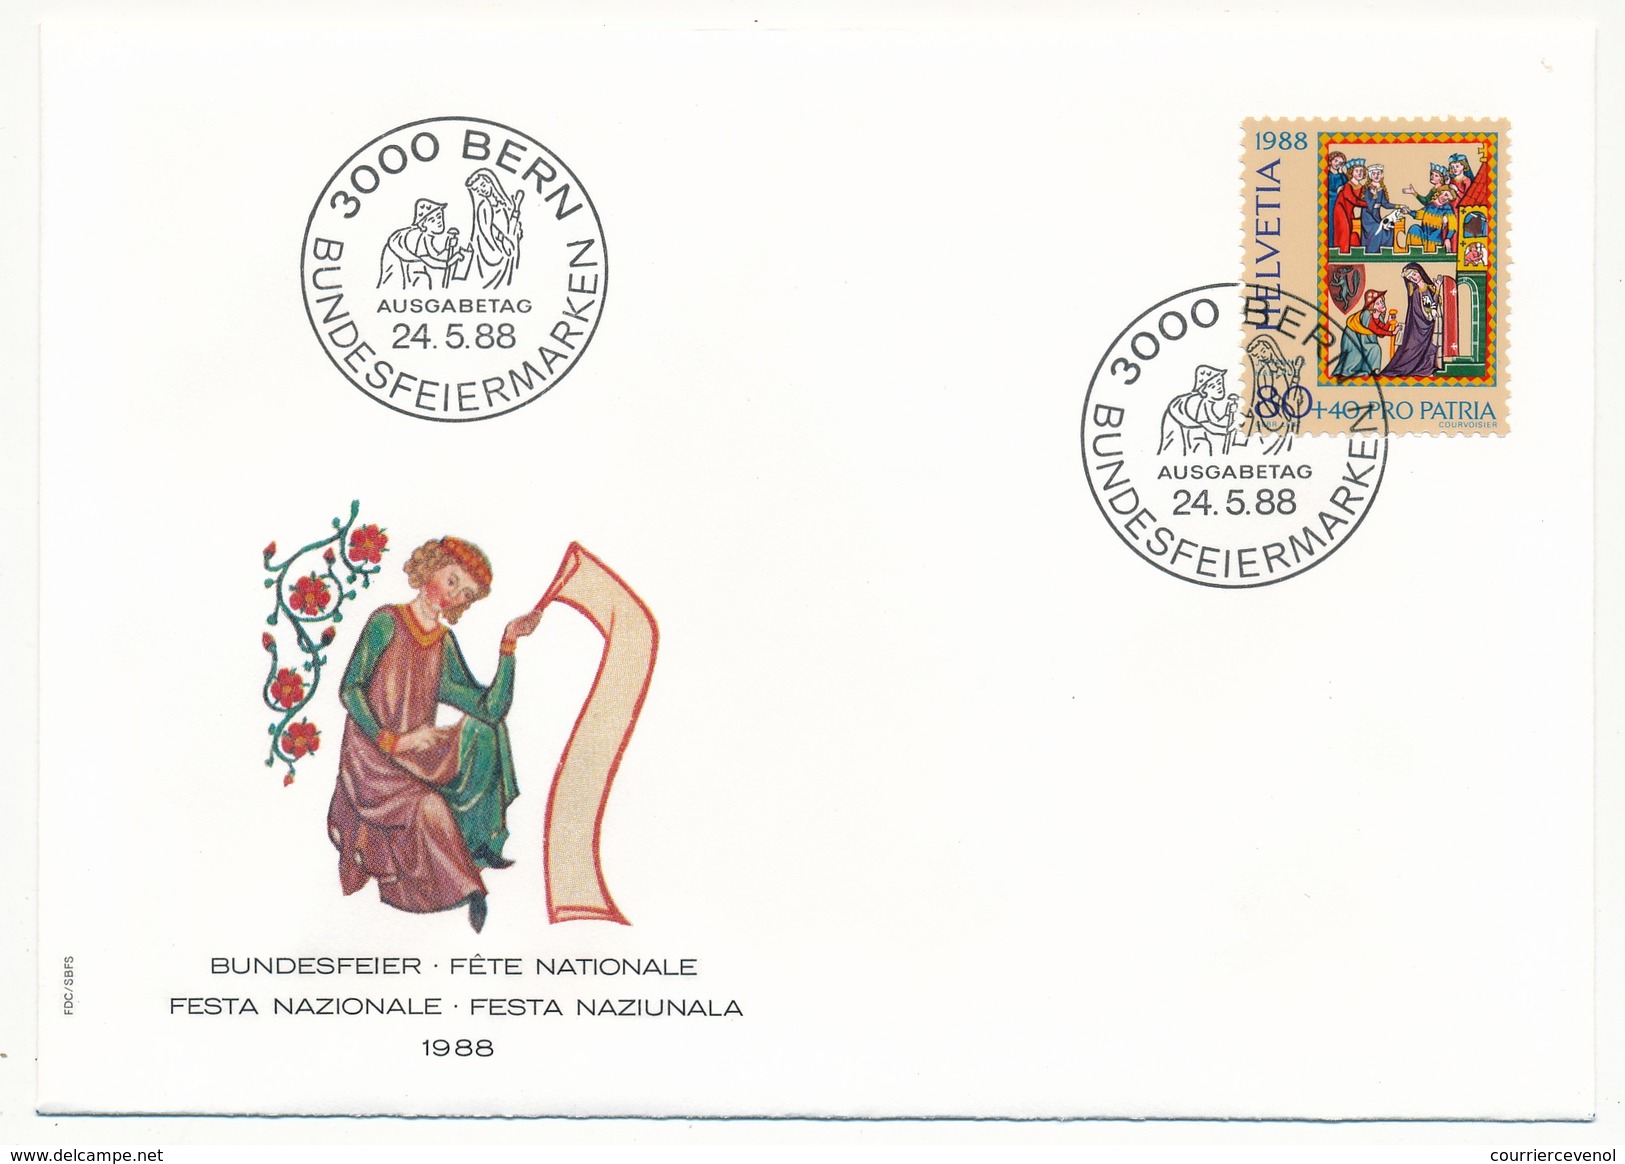 SUISSE - 5 Enveloppes FDC - Fête Nationale 1988 (Pro Patria) - BERN 24/5/1988 - Dienstmarken